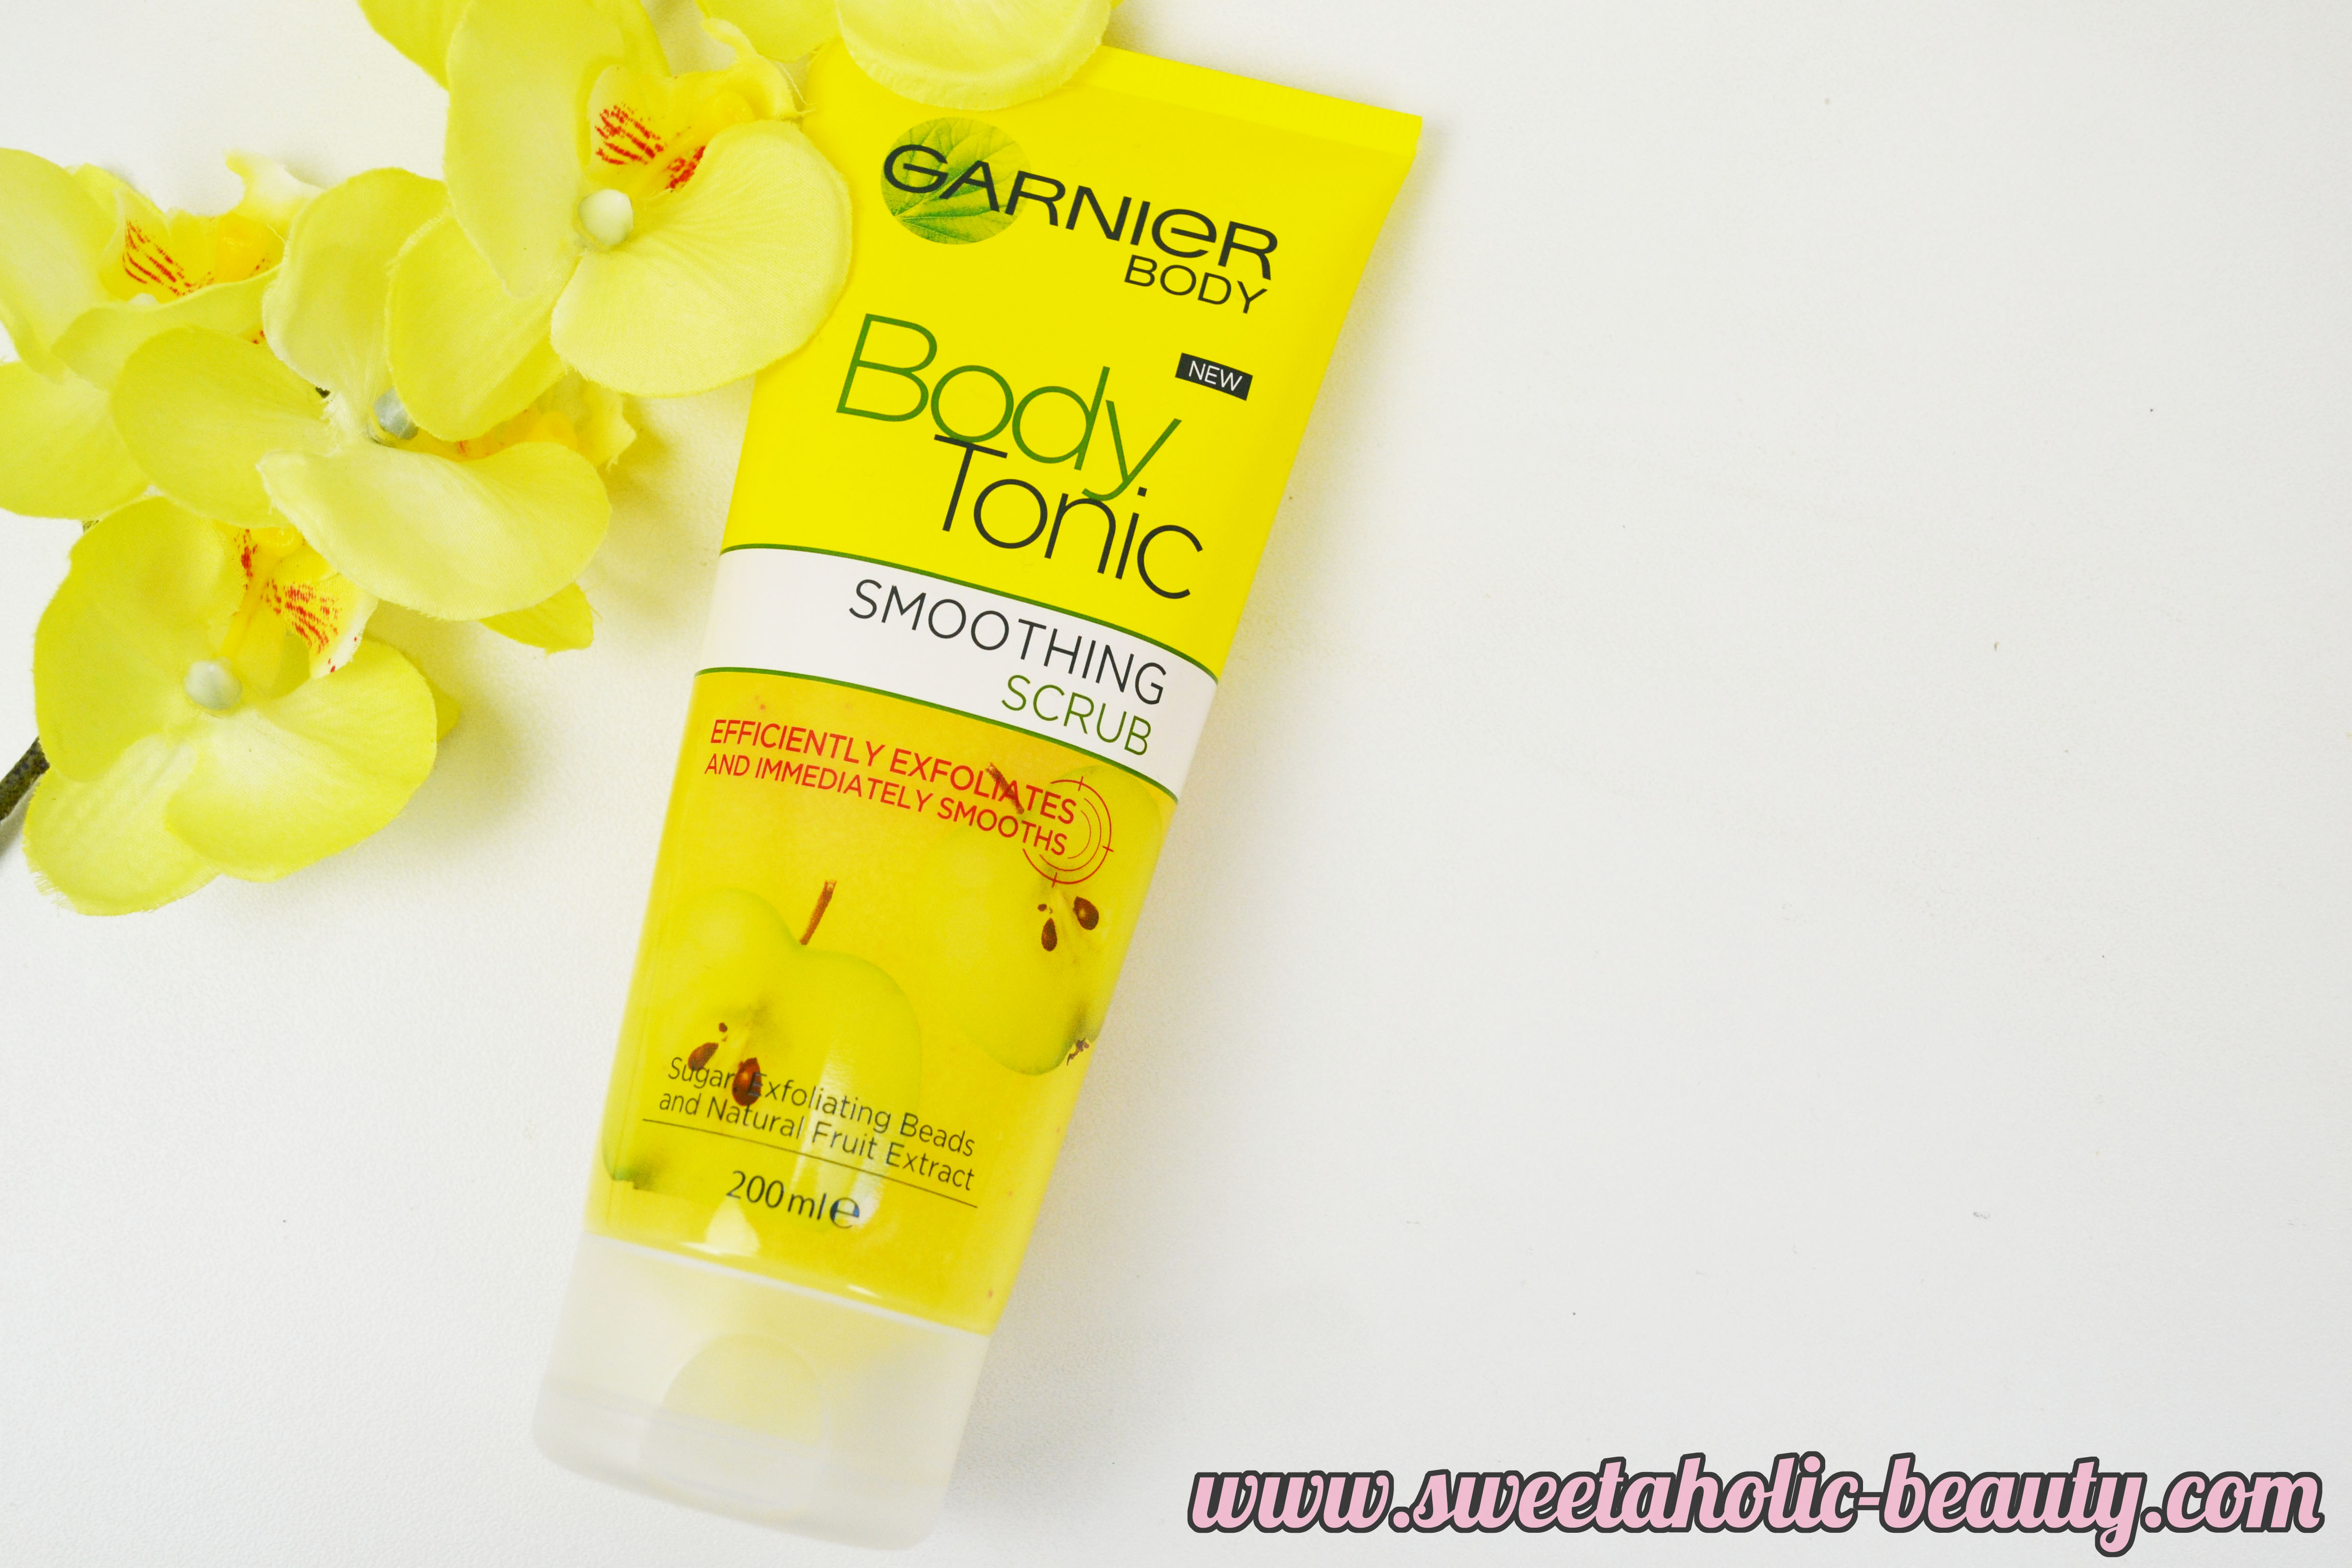 Garnier Body Tonic Smoothing Scrub Review - Sweetaholic Beauty